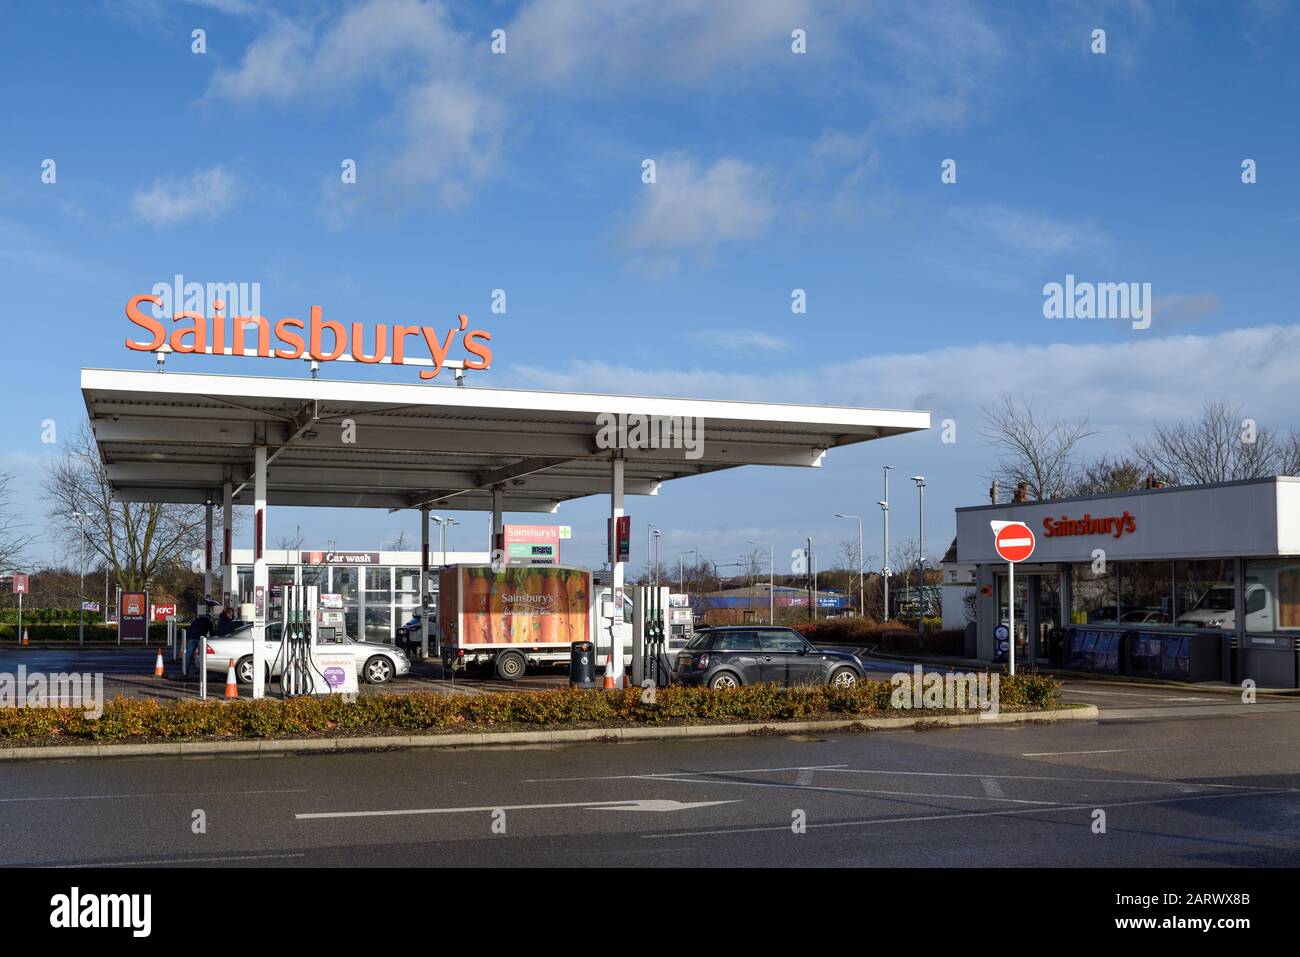 Sainsbury's Supermarkt, Fuel Station Mansfield, UK. Stock Photo